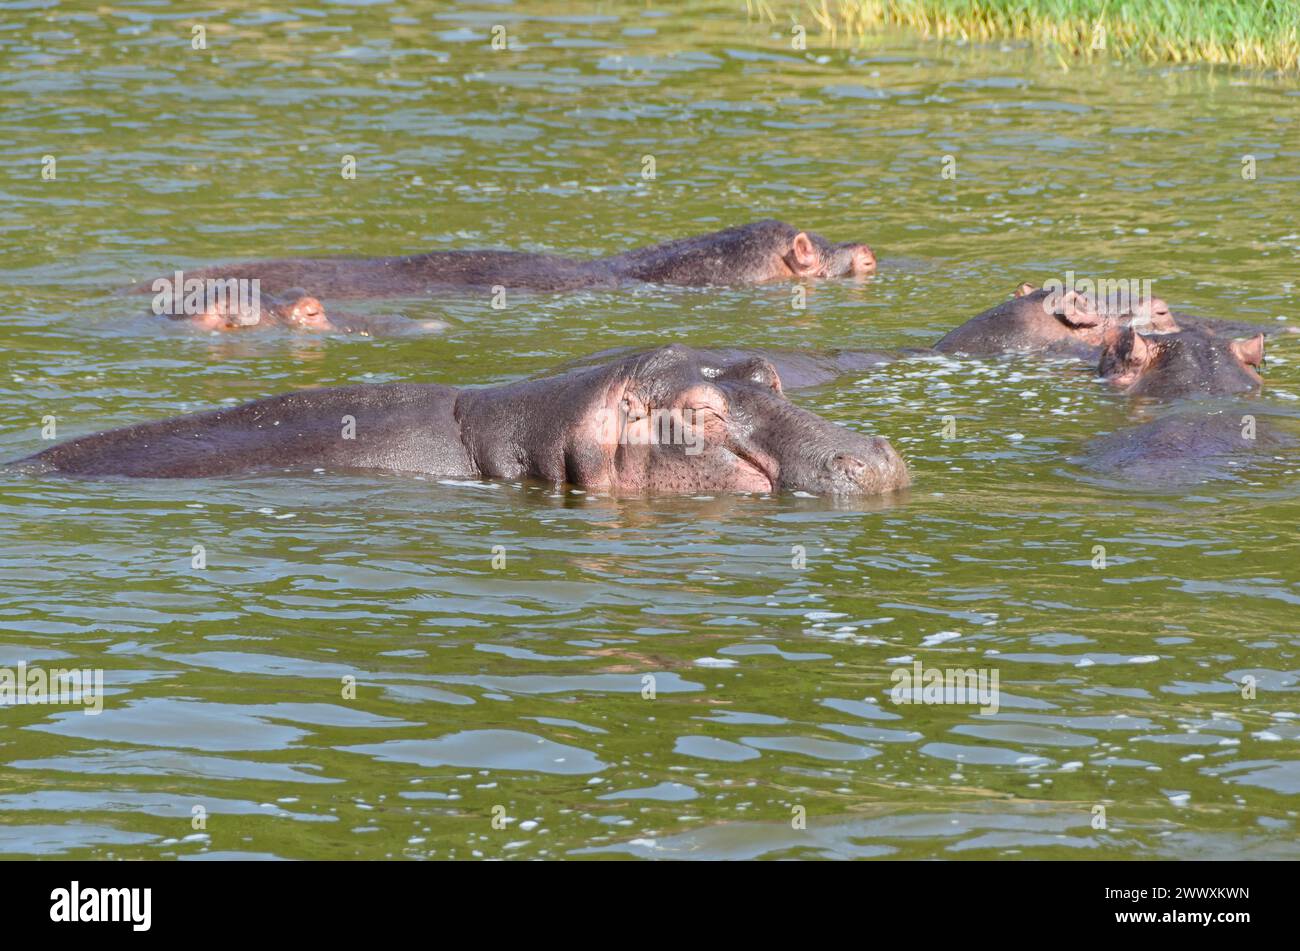 Gruppo di ippopotami africani, ippopotamo anfibo, in acqua, fauna selvatica. Safari in Uganda. Foto Stock